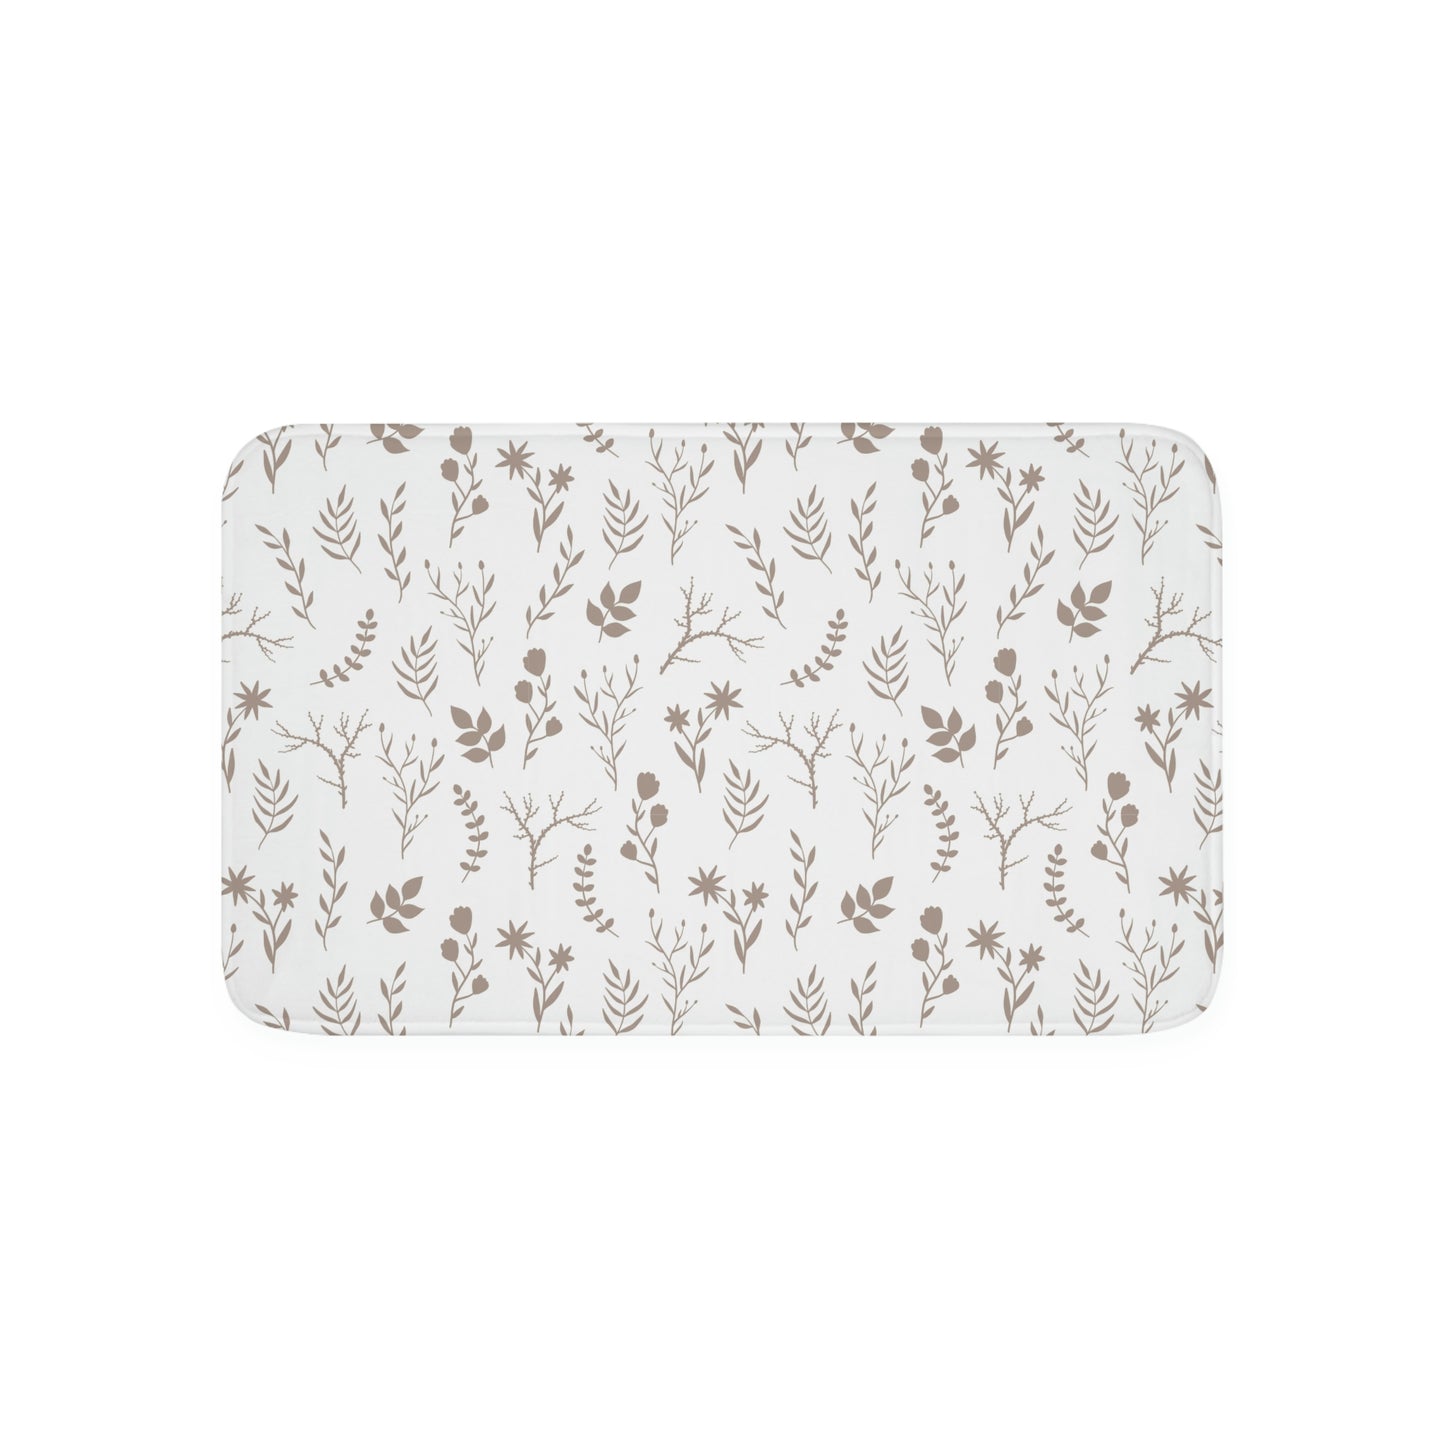 Taupe and White Floral Print Bathmat | Modern Floral Bathmat